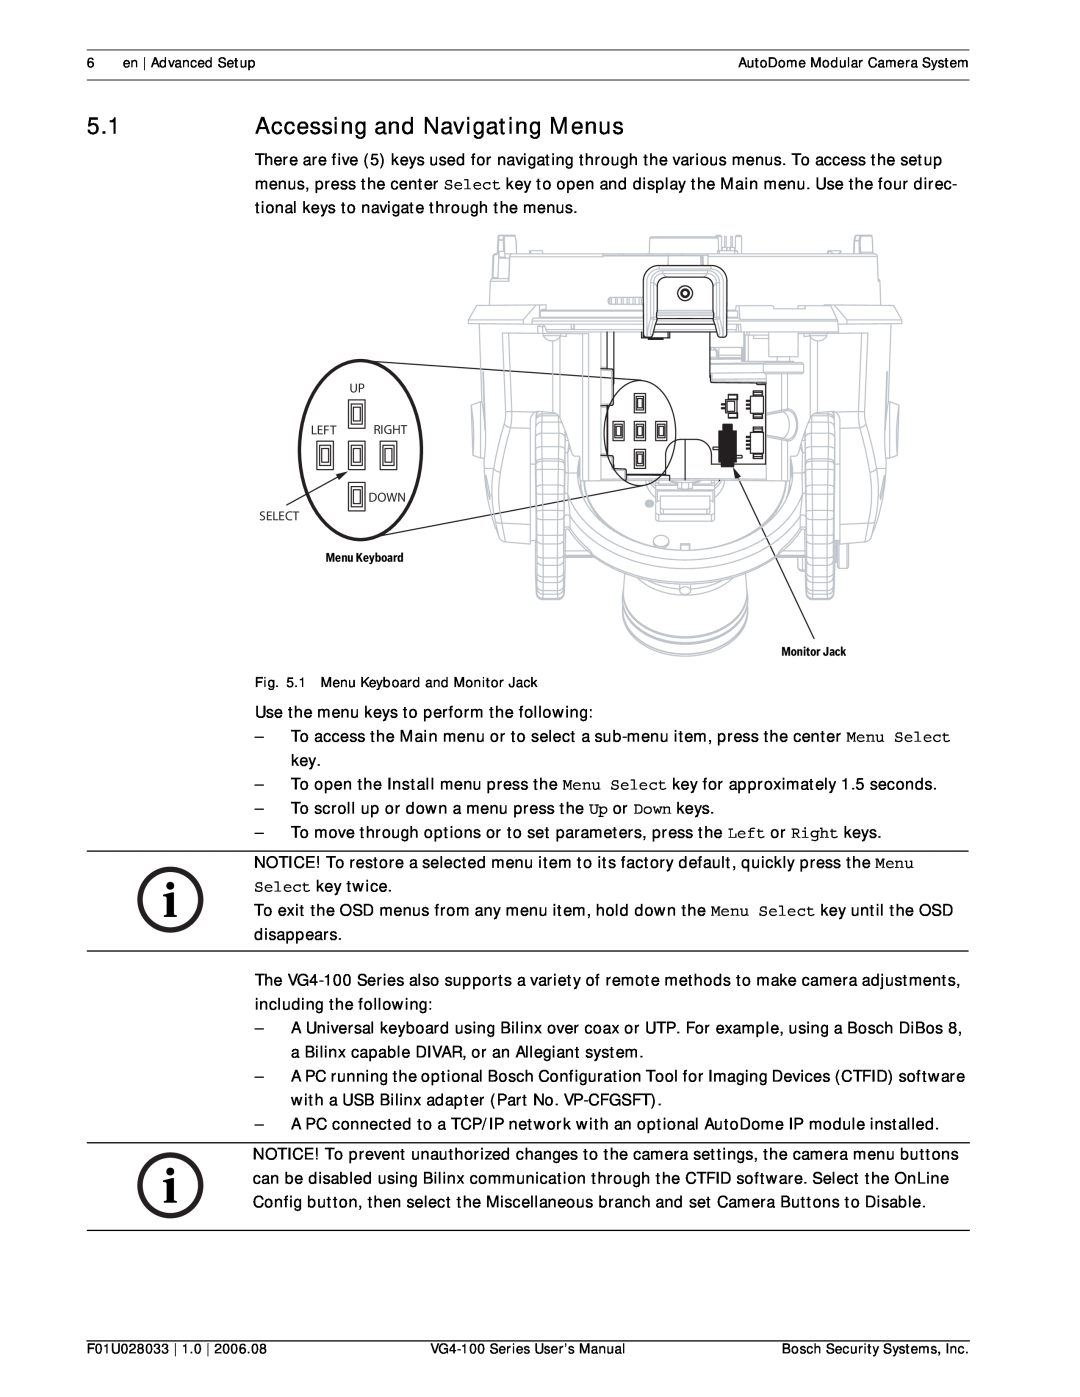 Bosch Appliances VG4-100 user manual Accessing and Navigating Menus, Menu Keyboard, Monitor Jack 